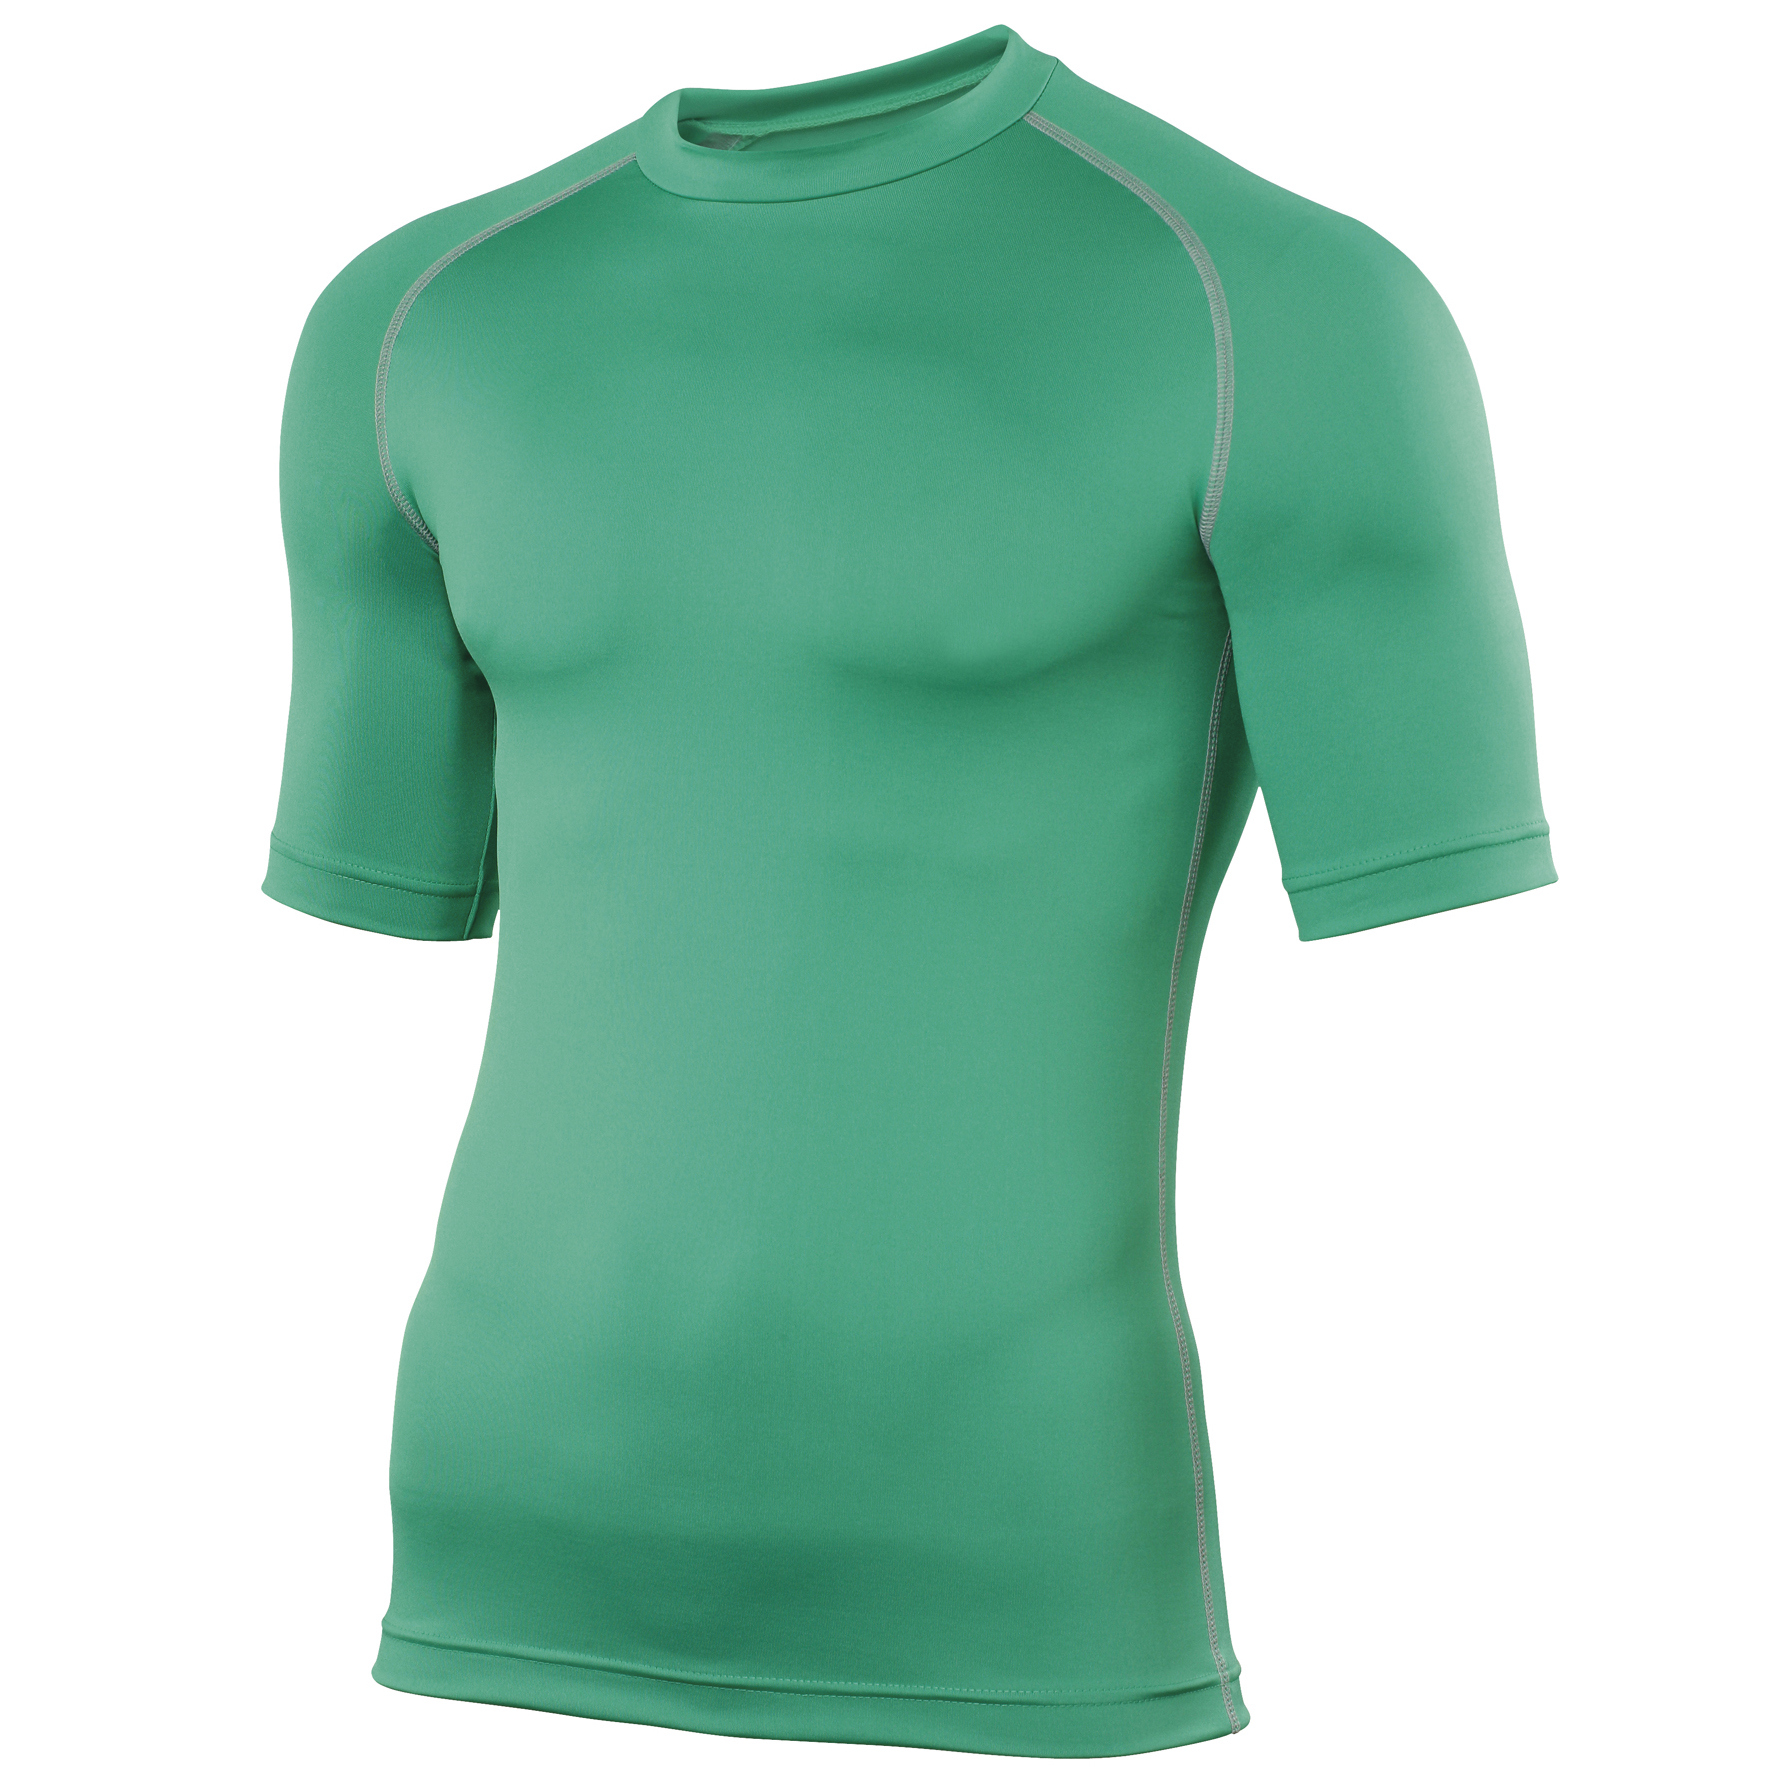 T-shirt Desportiva Rhino - verde - 